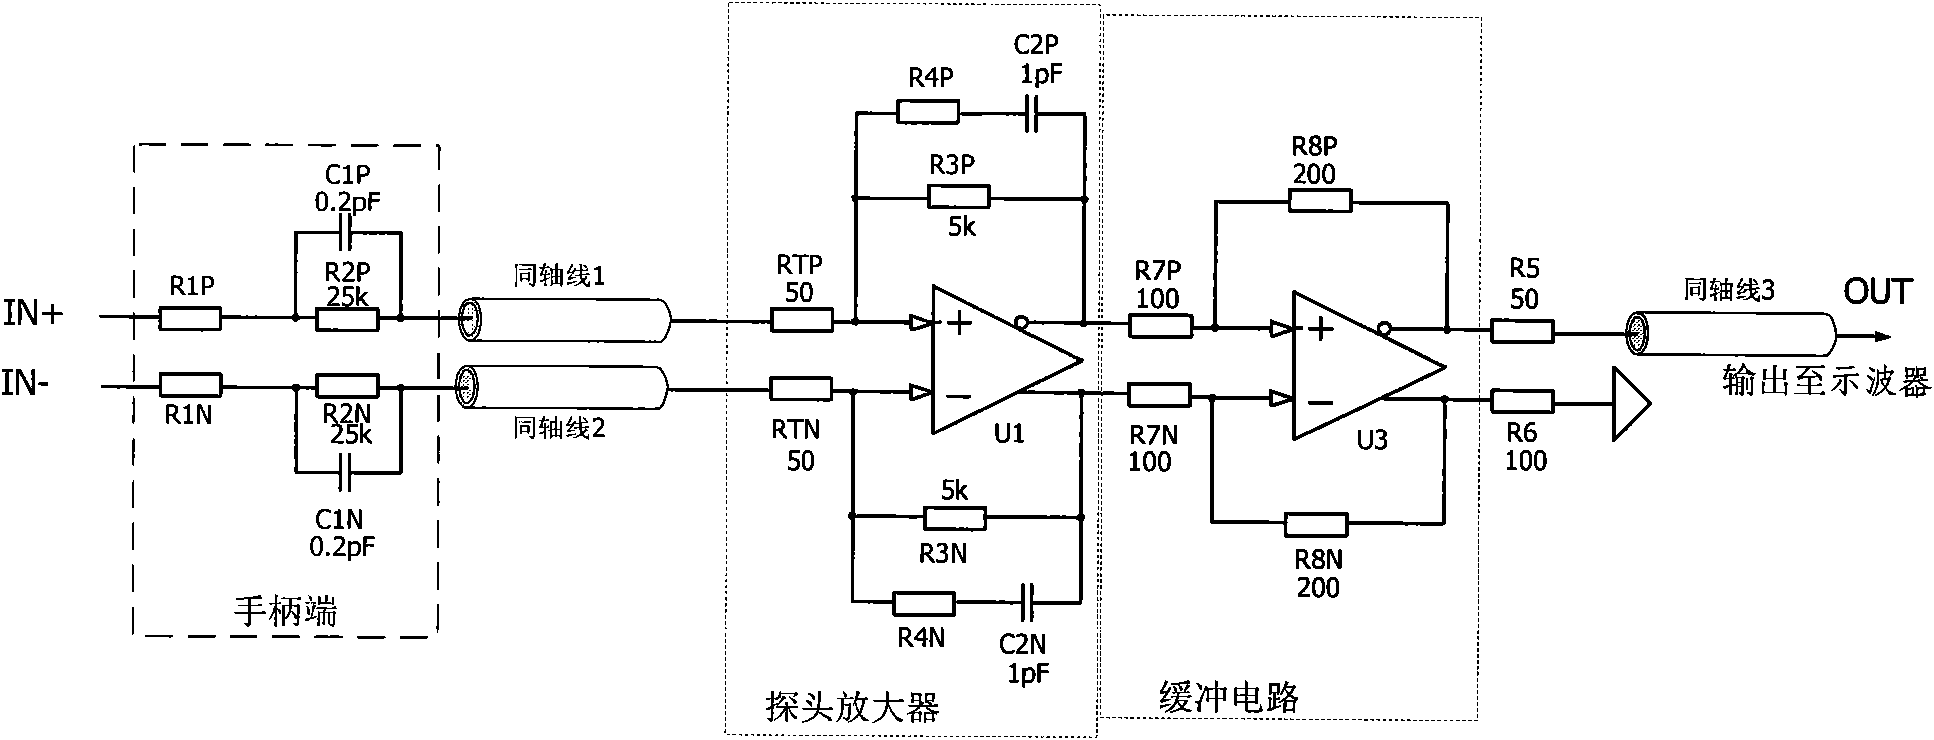 Active differential voltage probe